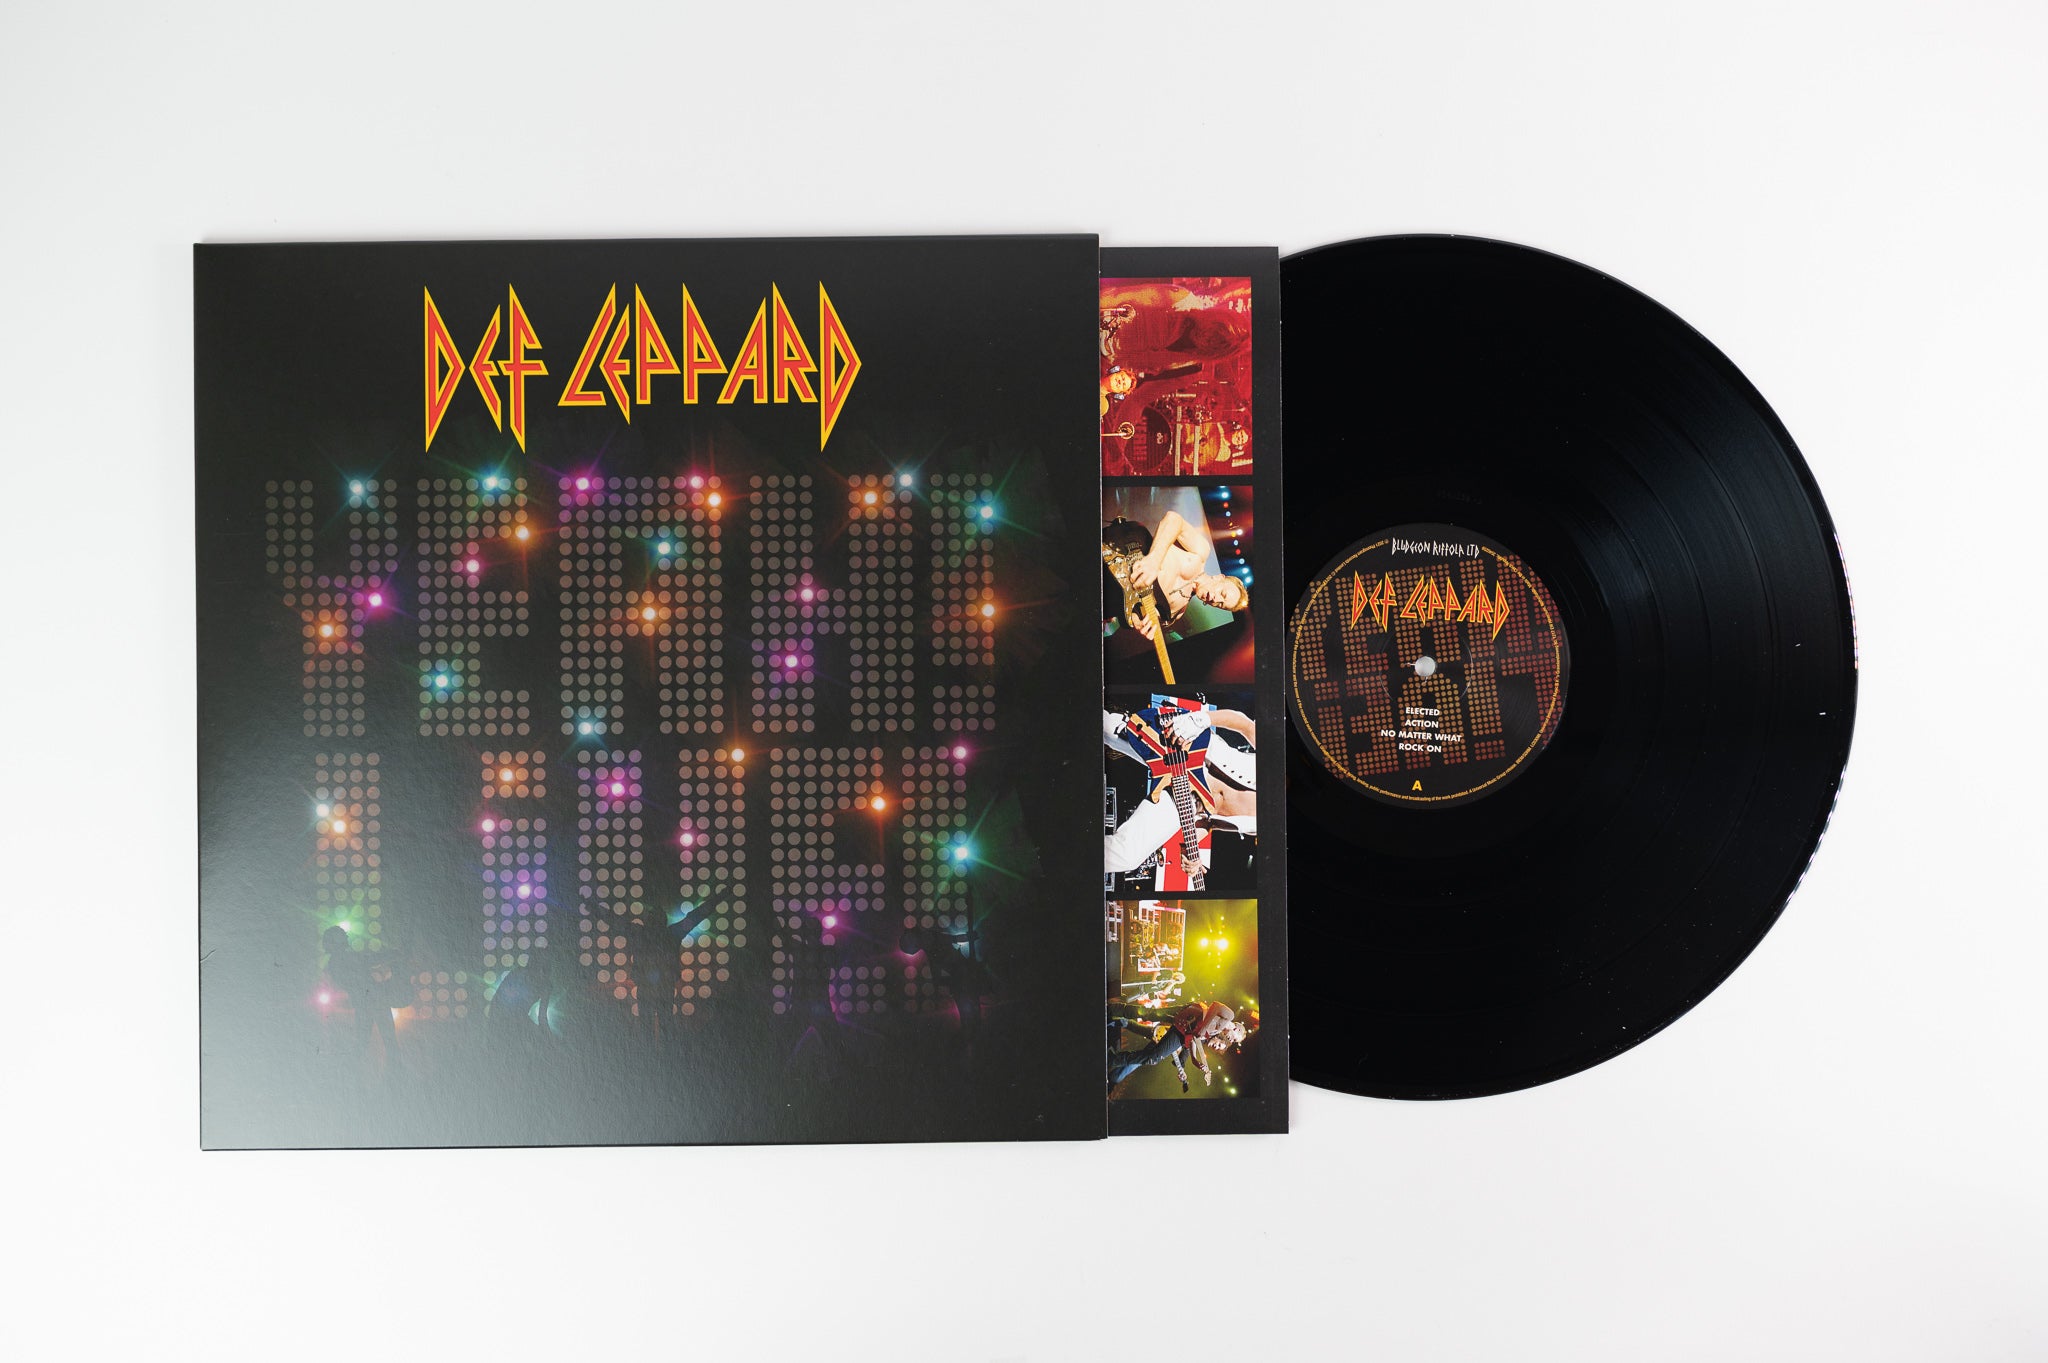 Def Leppard - Vinyl Collection Volume Three on Mercury UMC Virgin Box Set